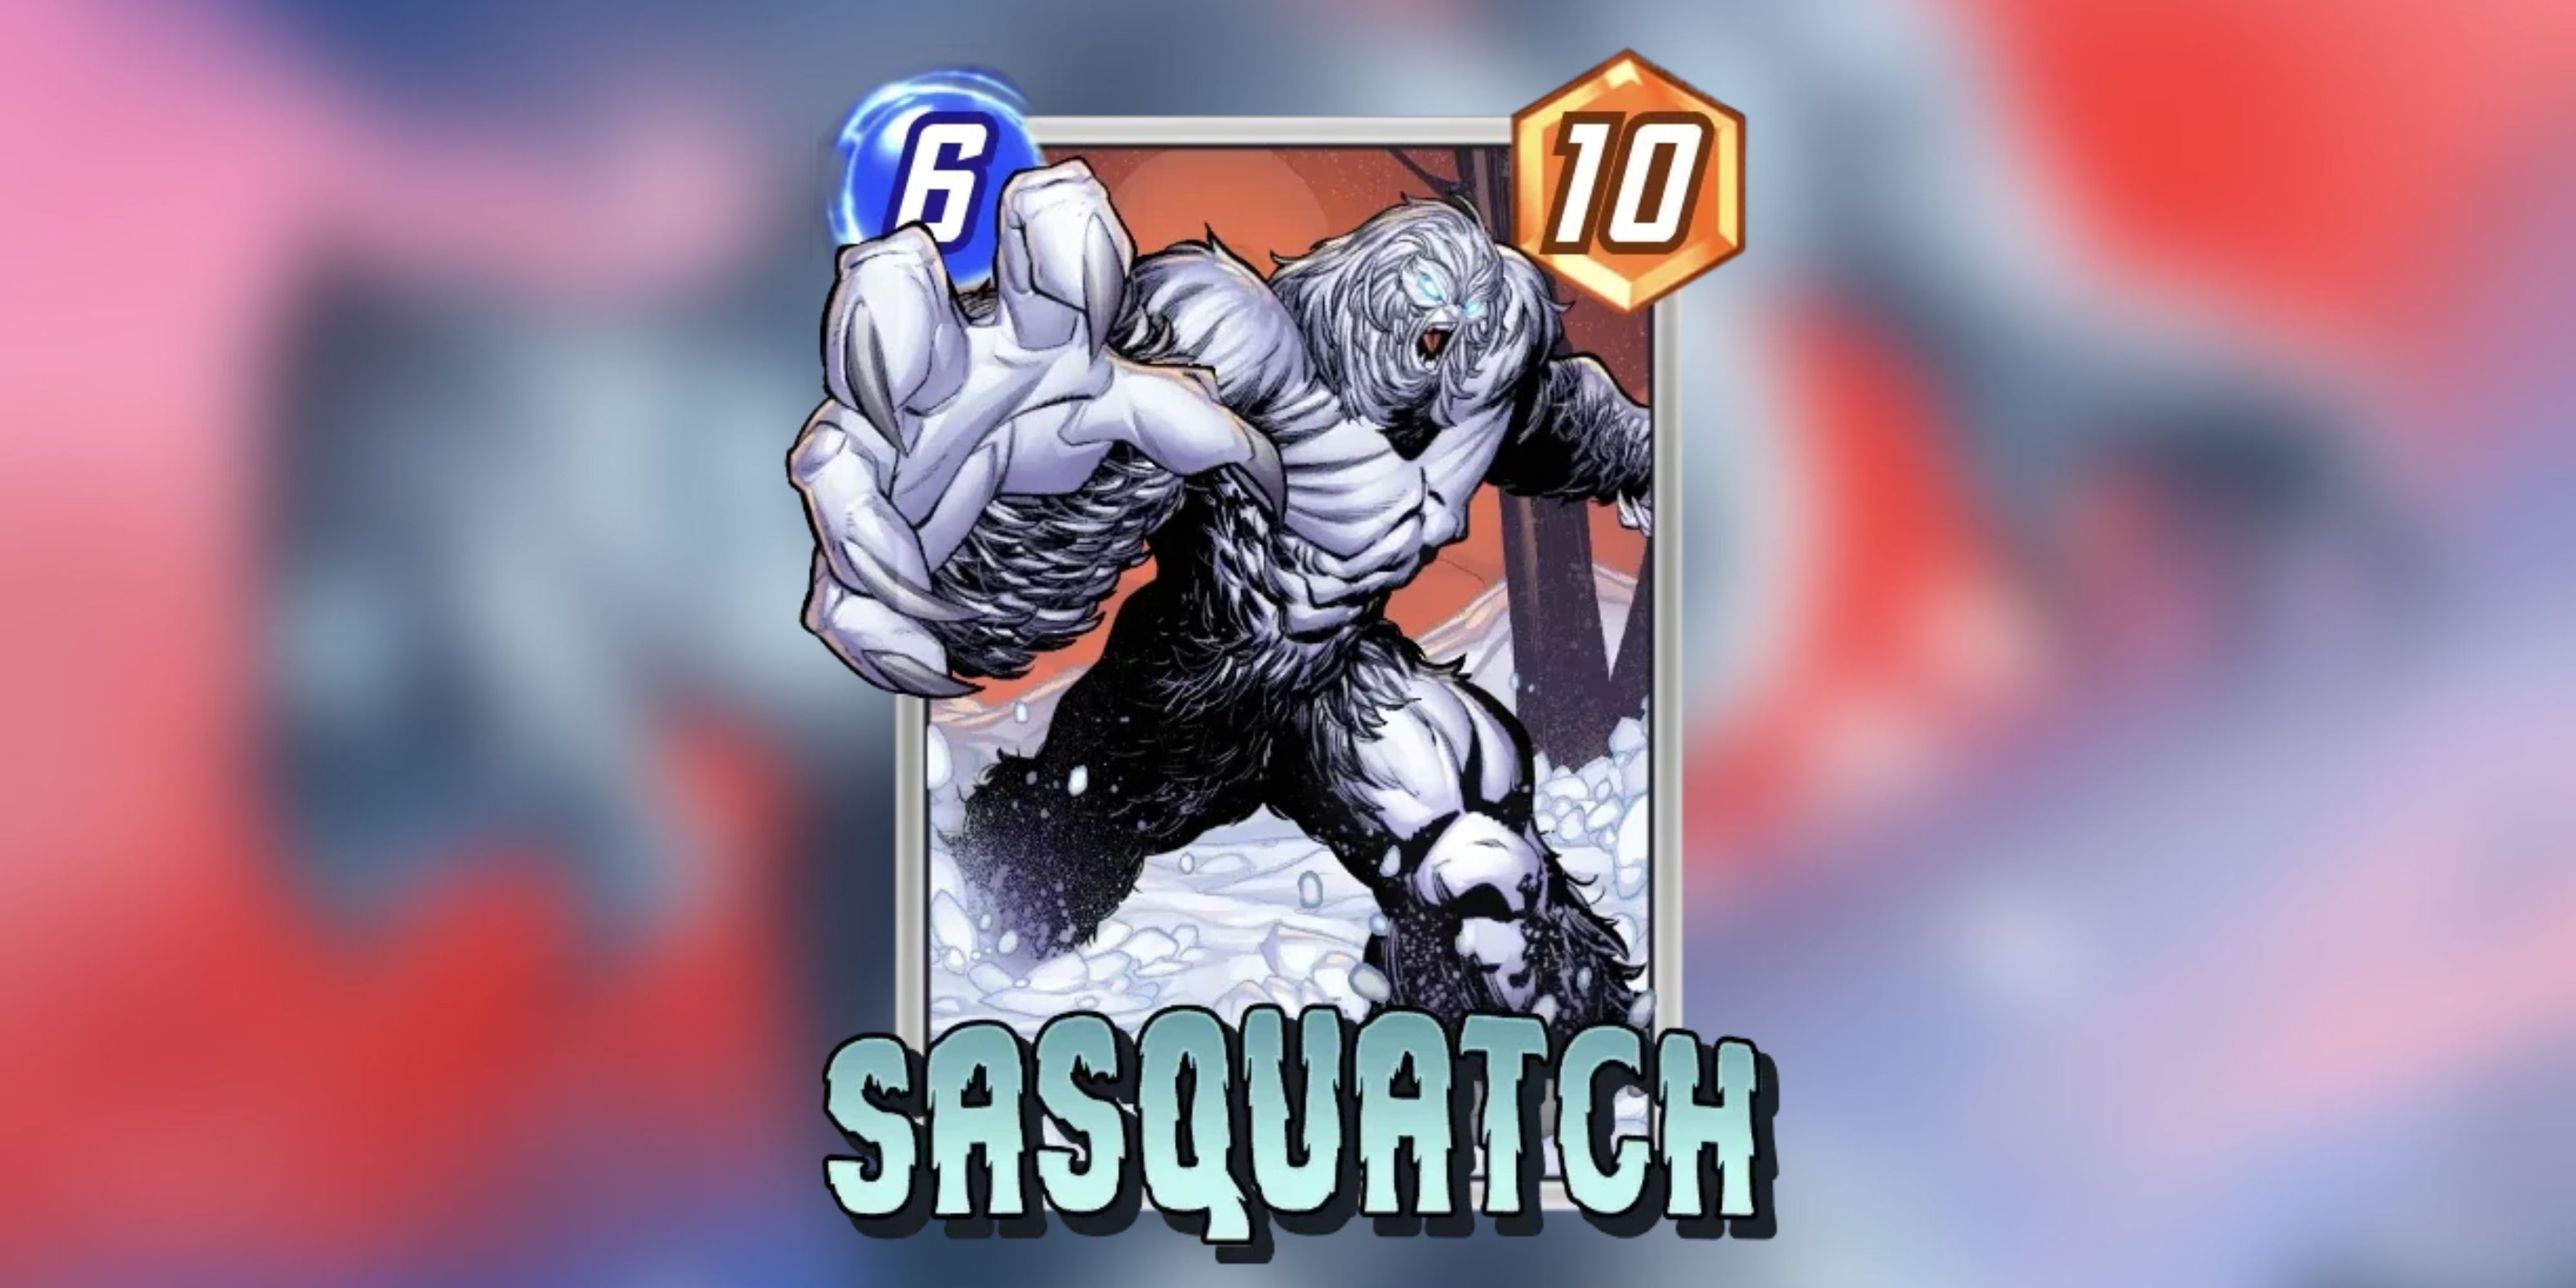 sasquatch card in marvel snap.